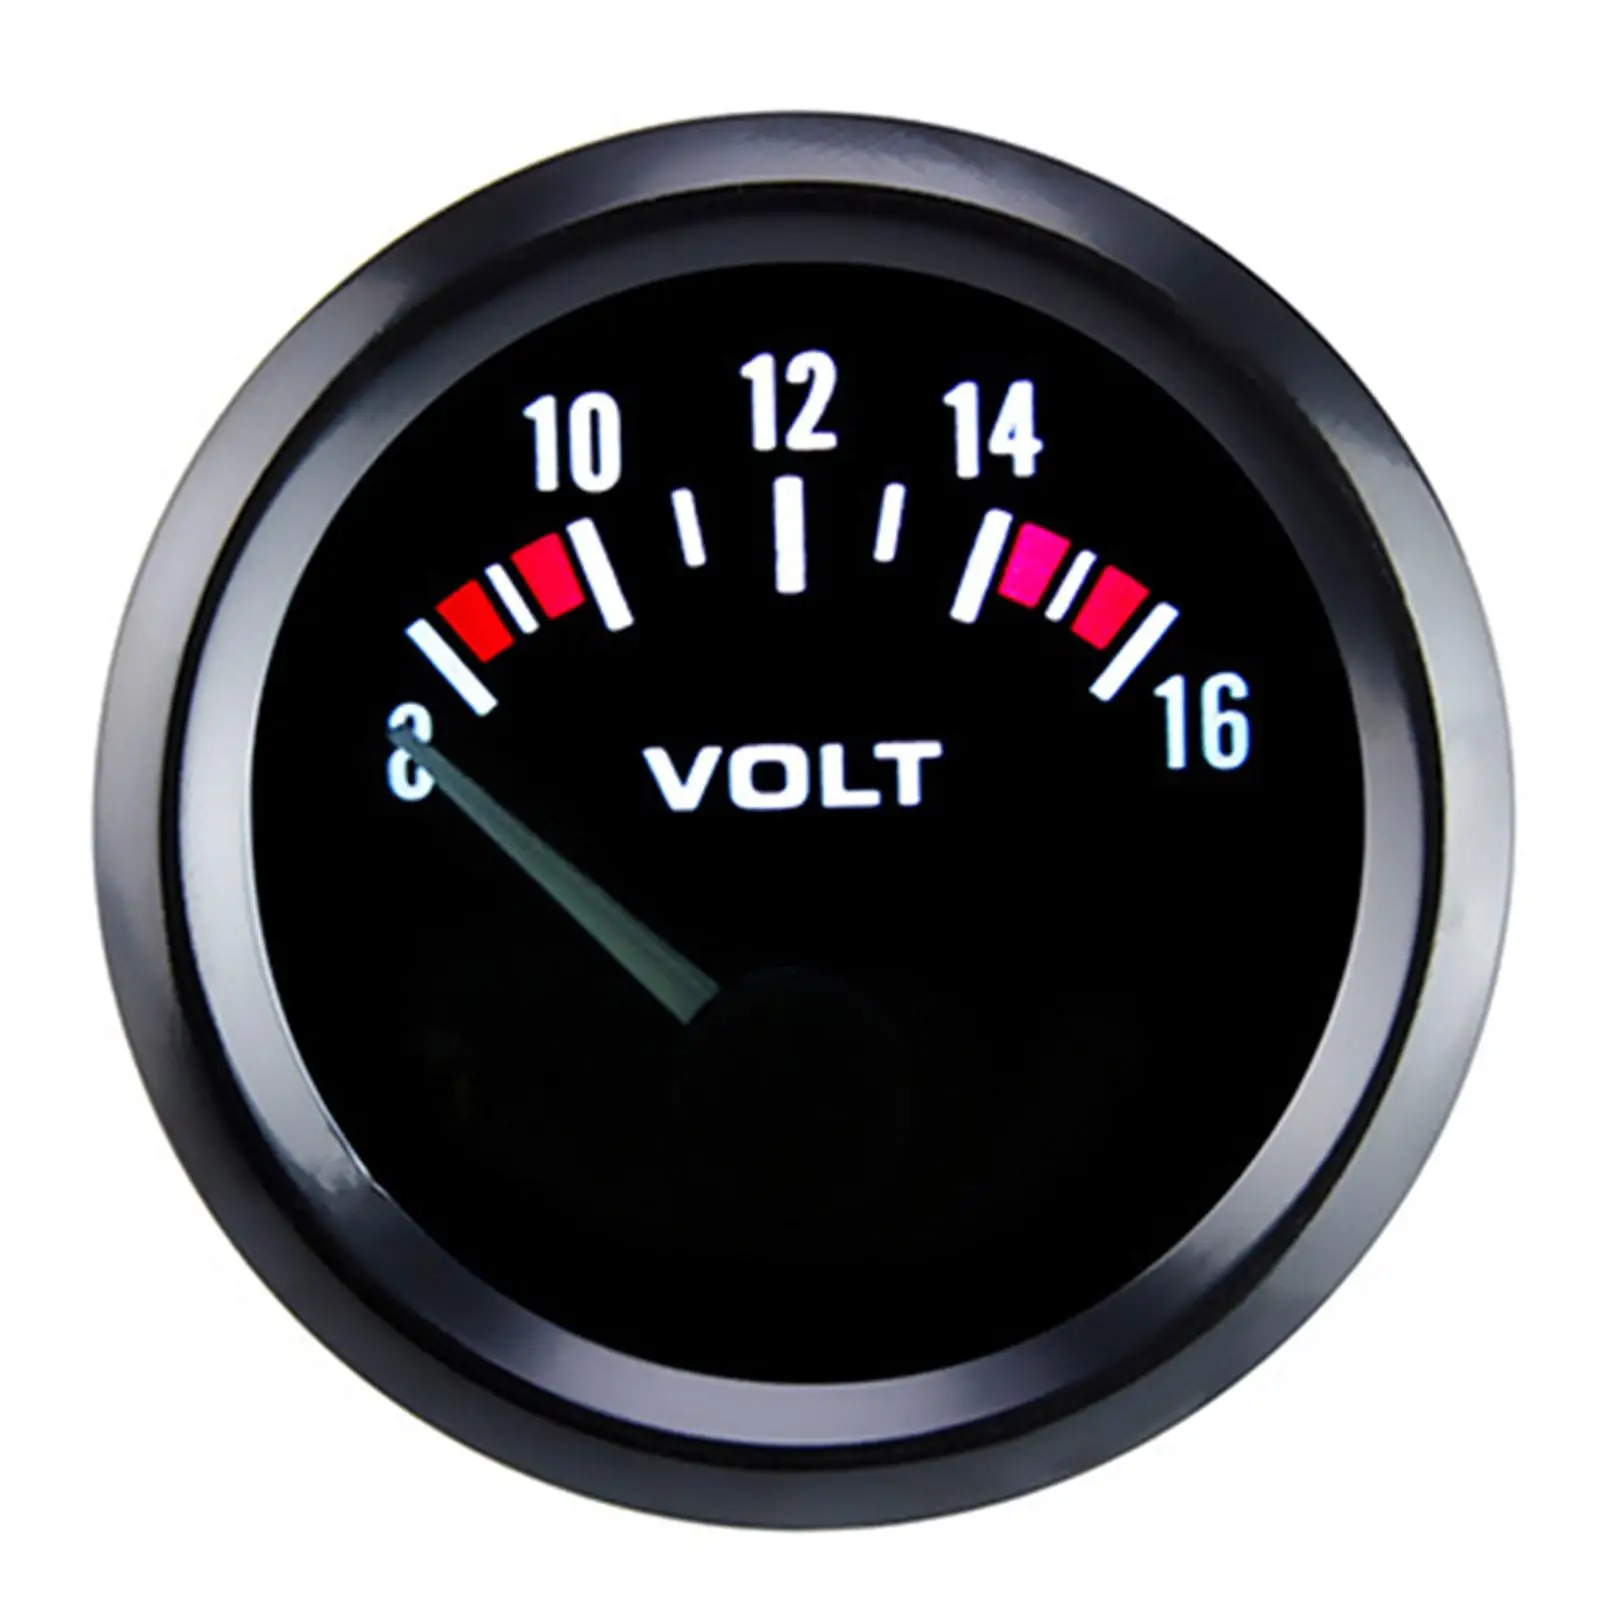 Car Voltmeter High Performance Measure Range 8-16 V Auto Parts 52mm Voltage